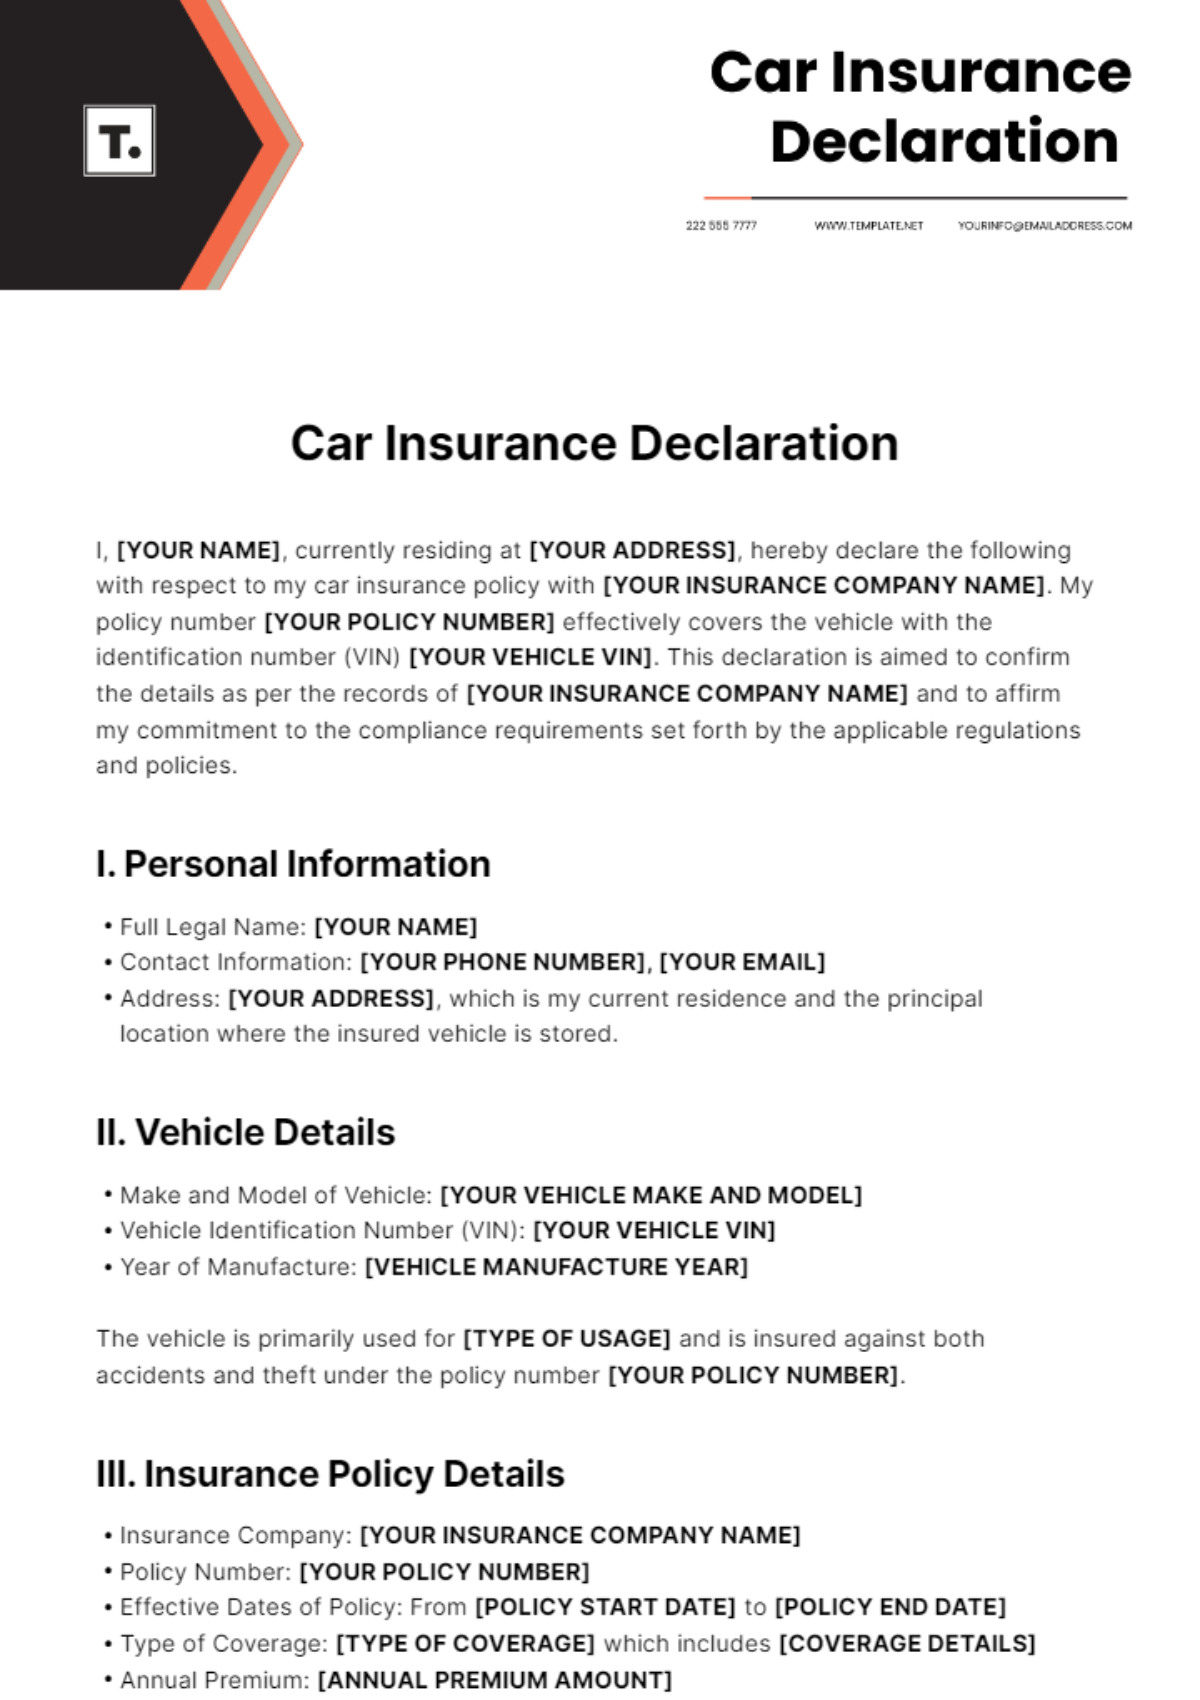 Car Insurance Declaration Template